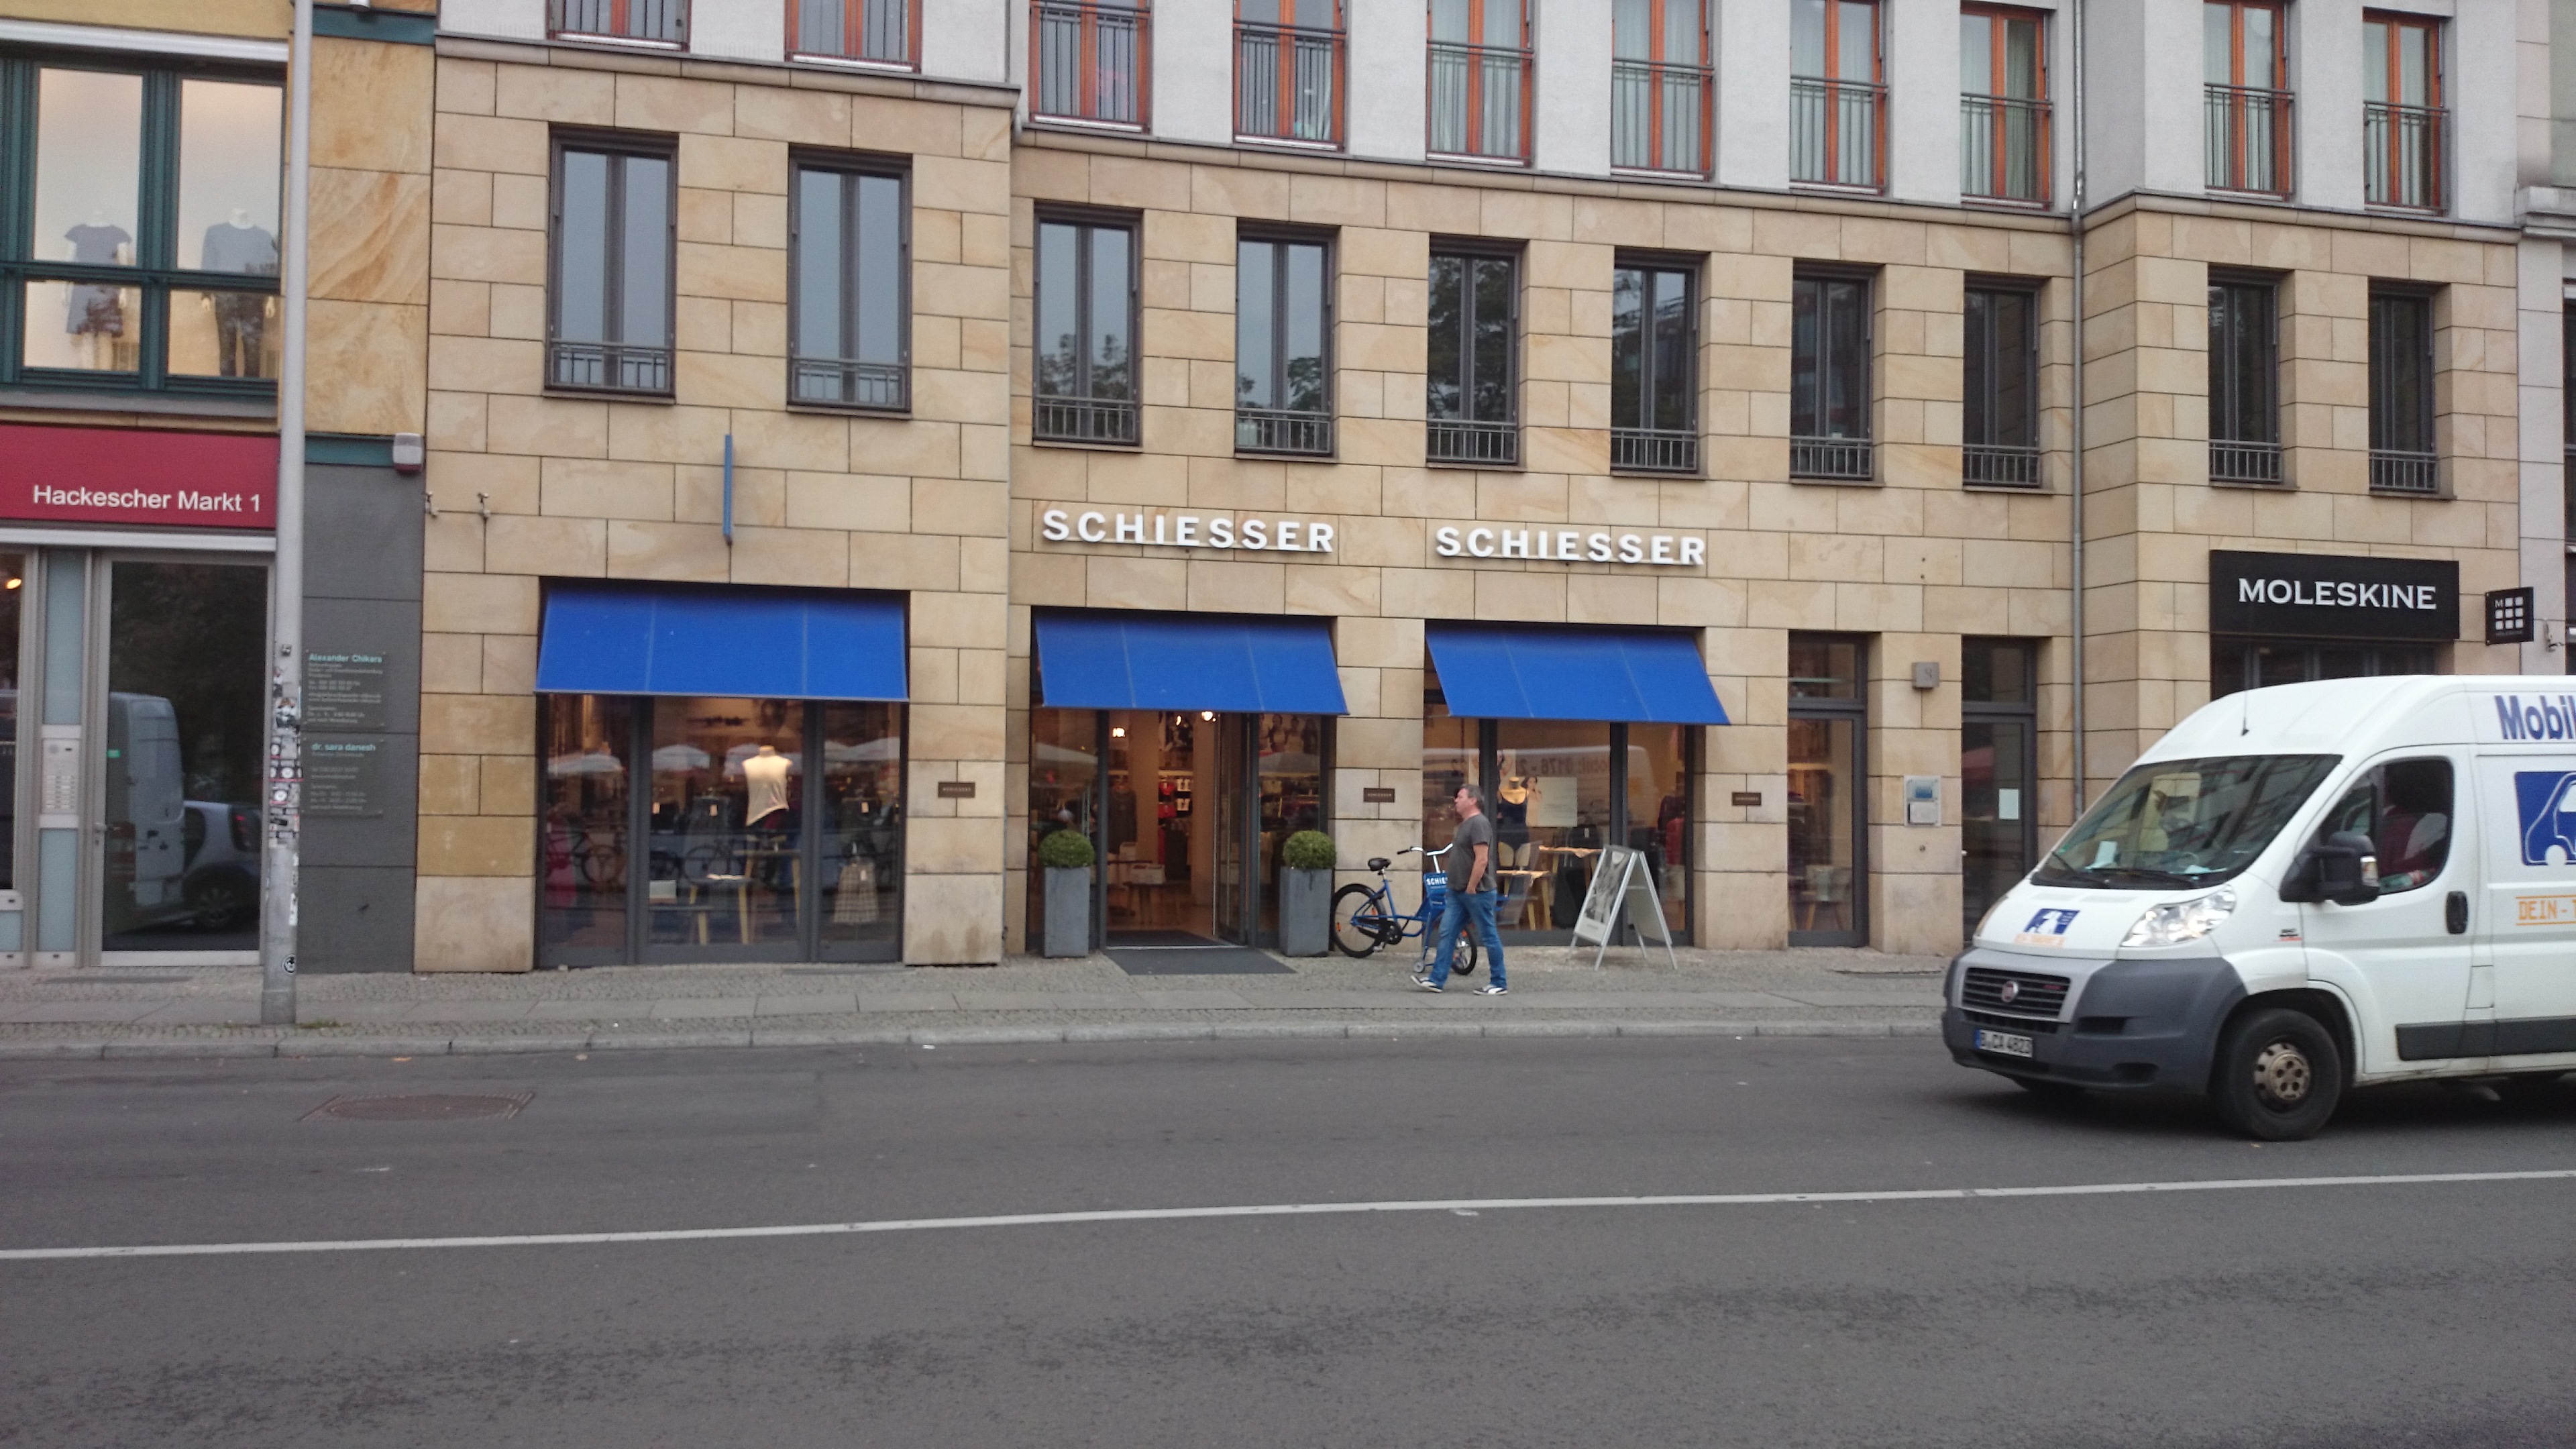 Schiesser Store Berlin Hackescher Markt in 10178 Berlin-Mitte